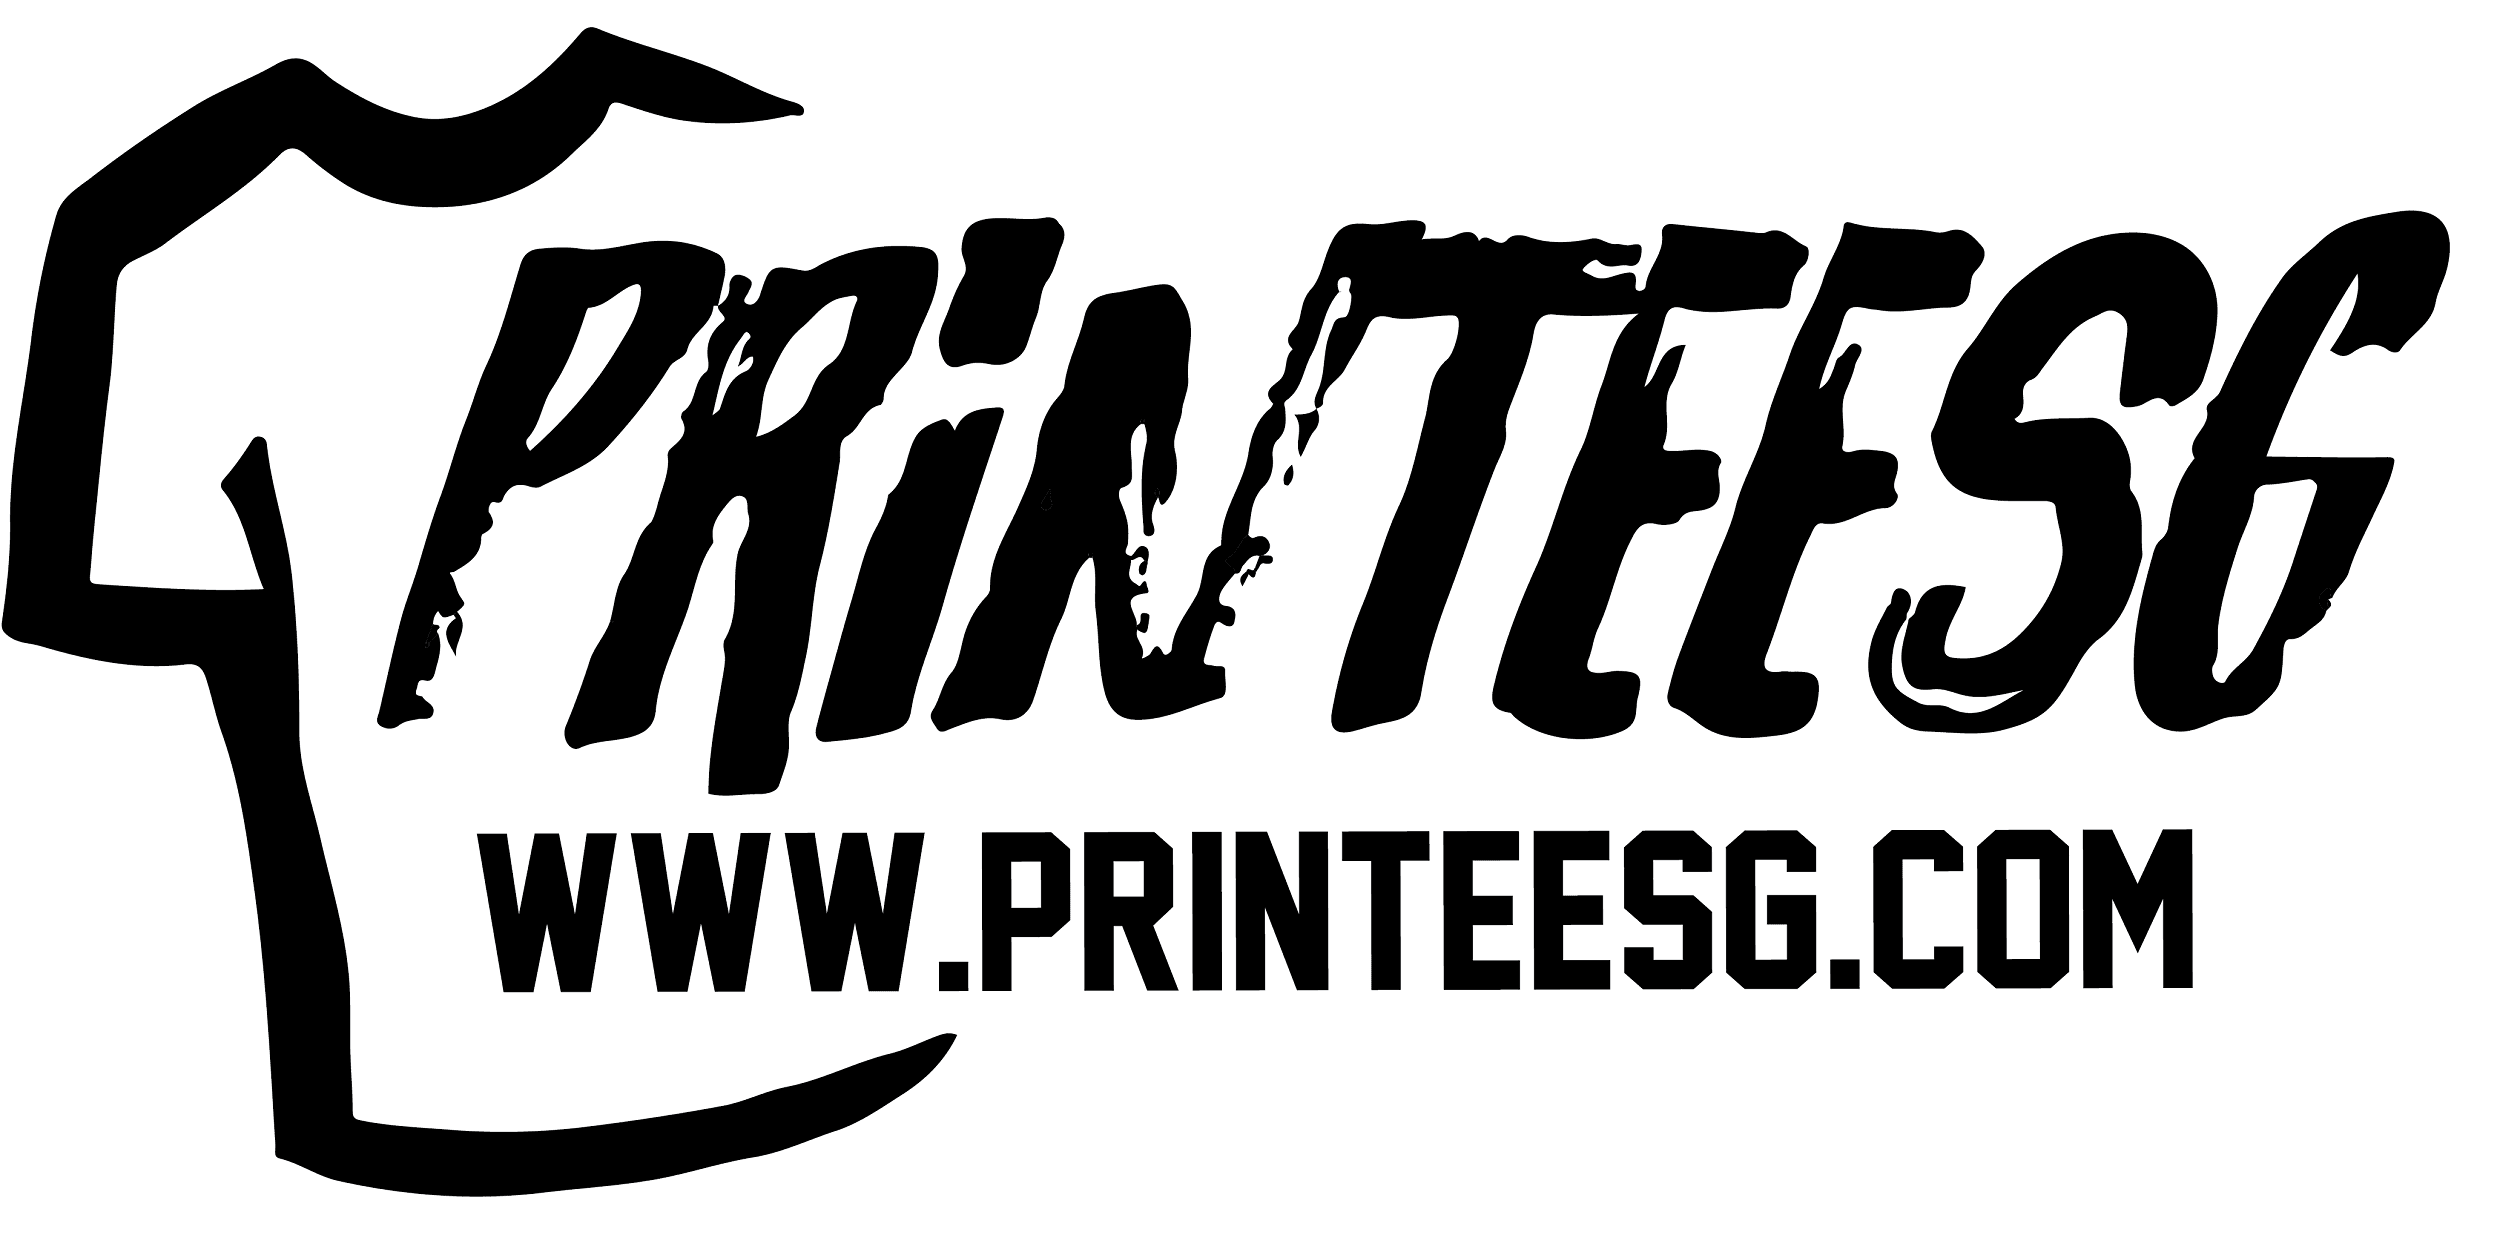 Printeesg Pte Ltd